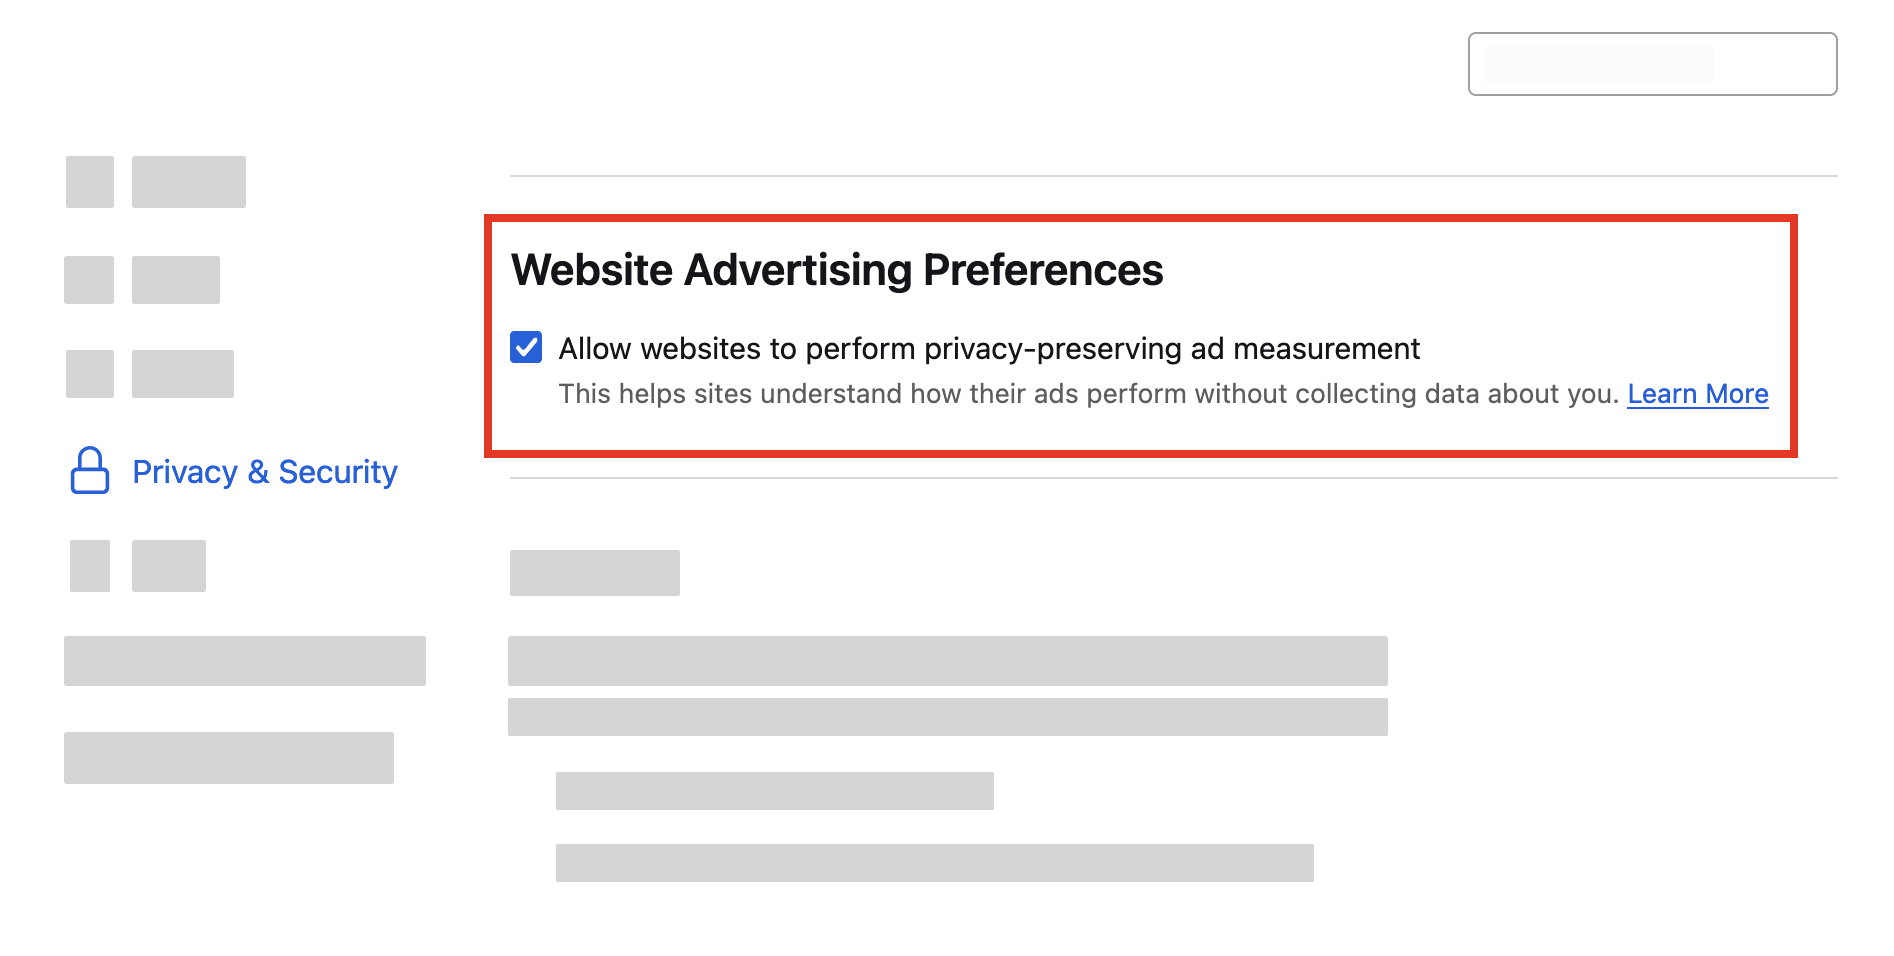 Website advertising preferences